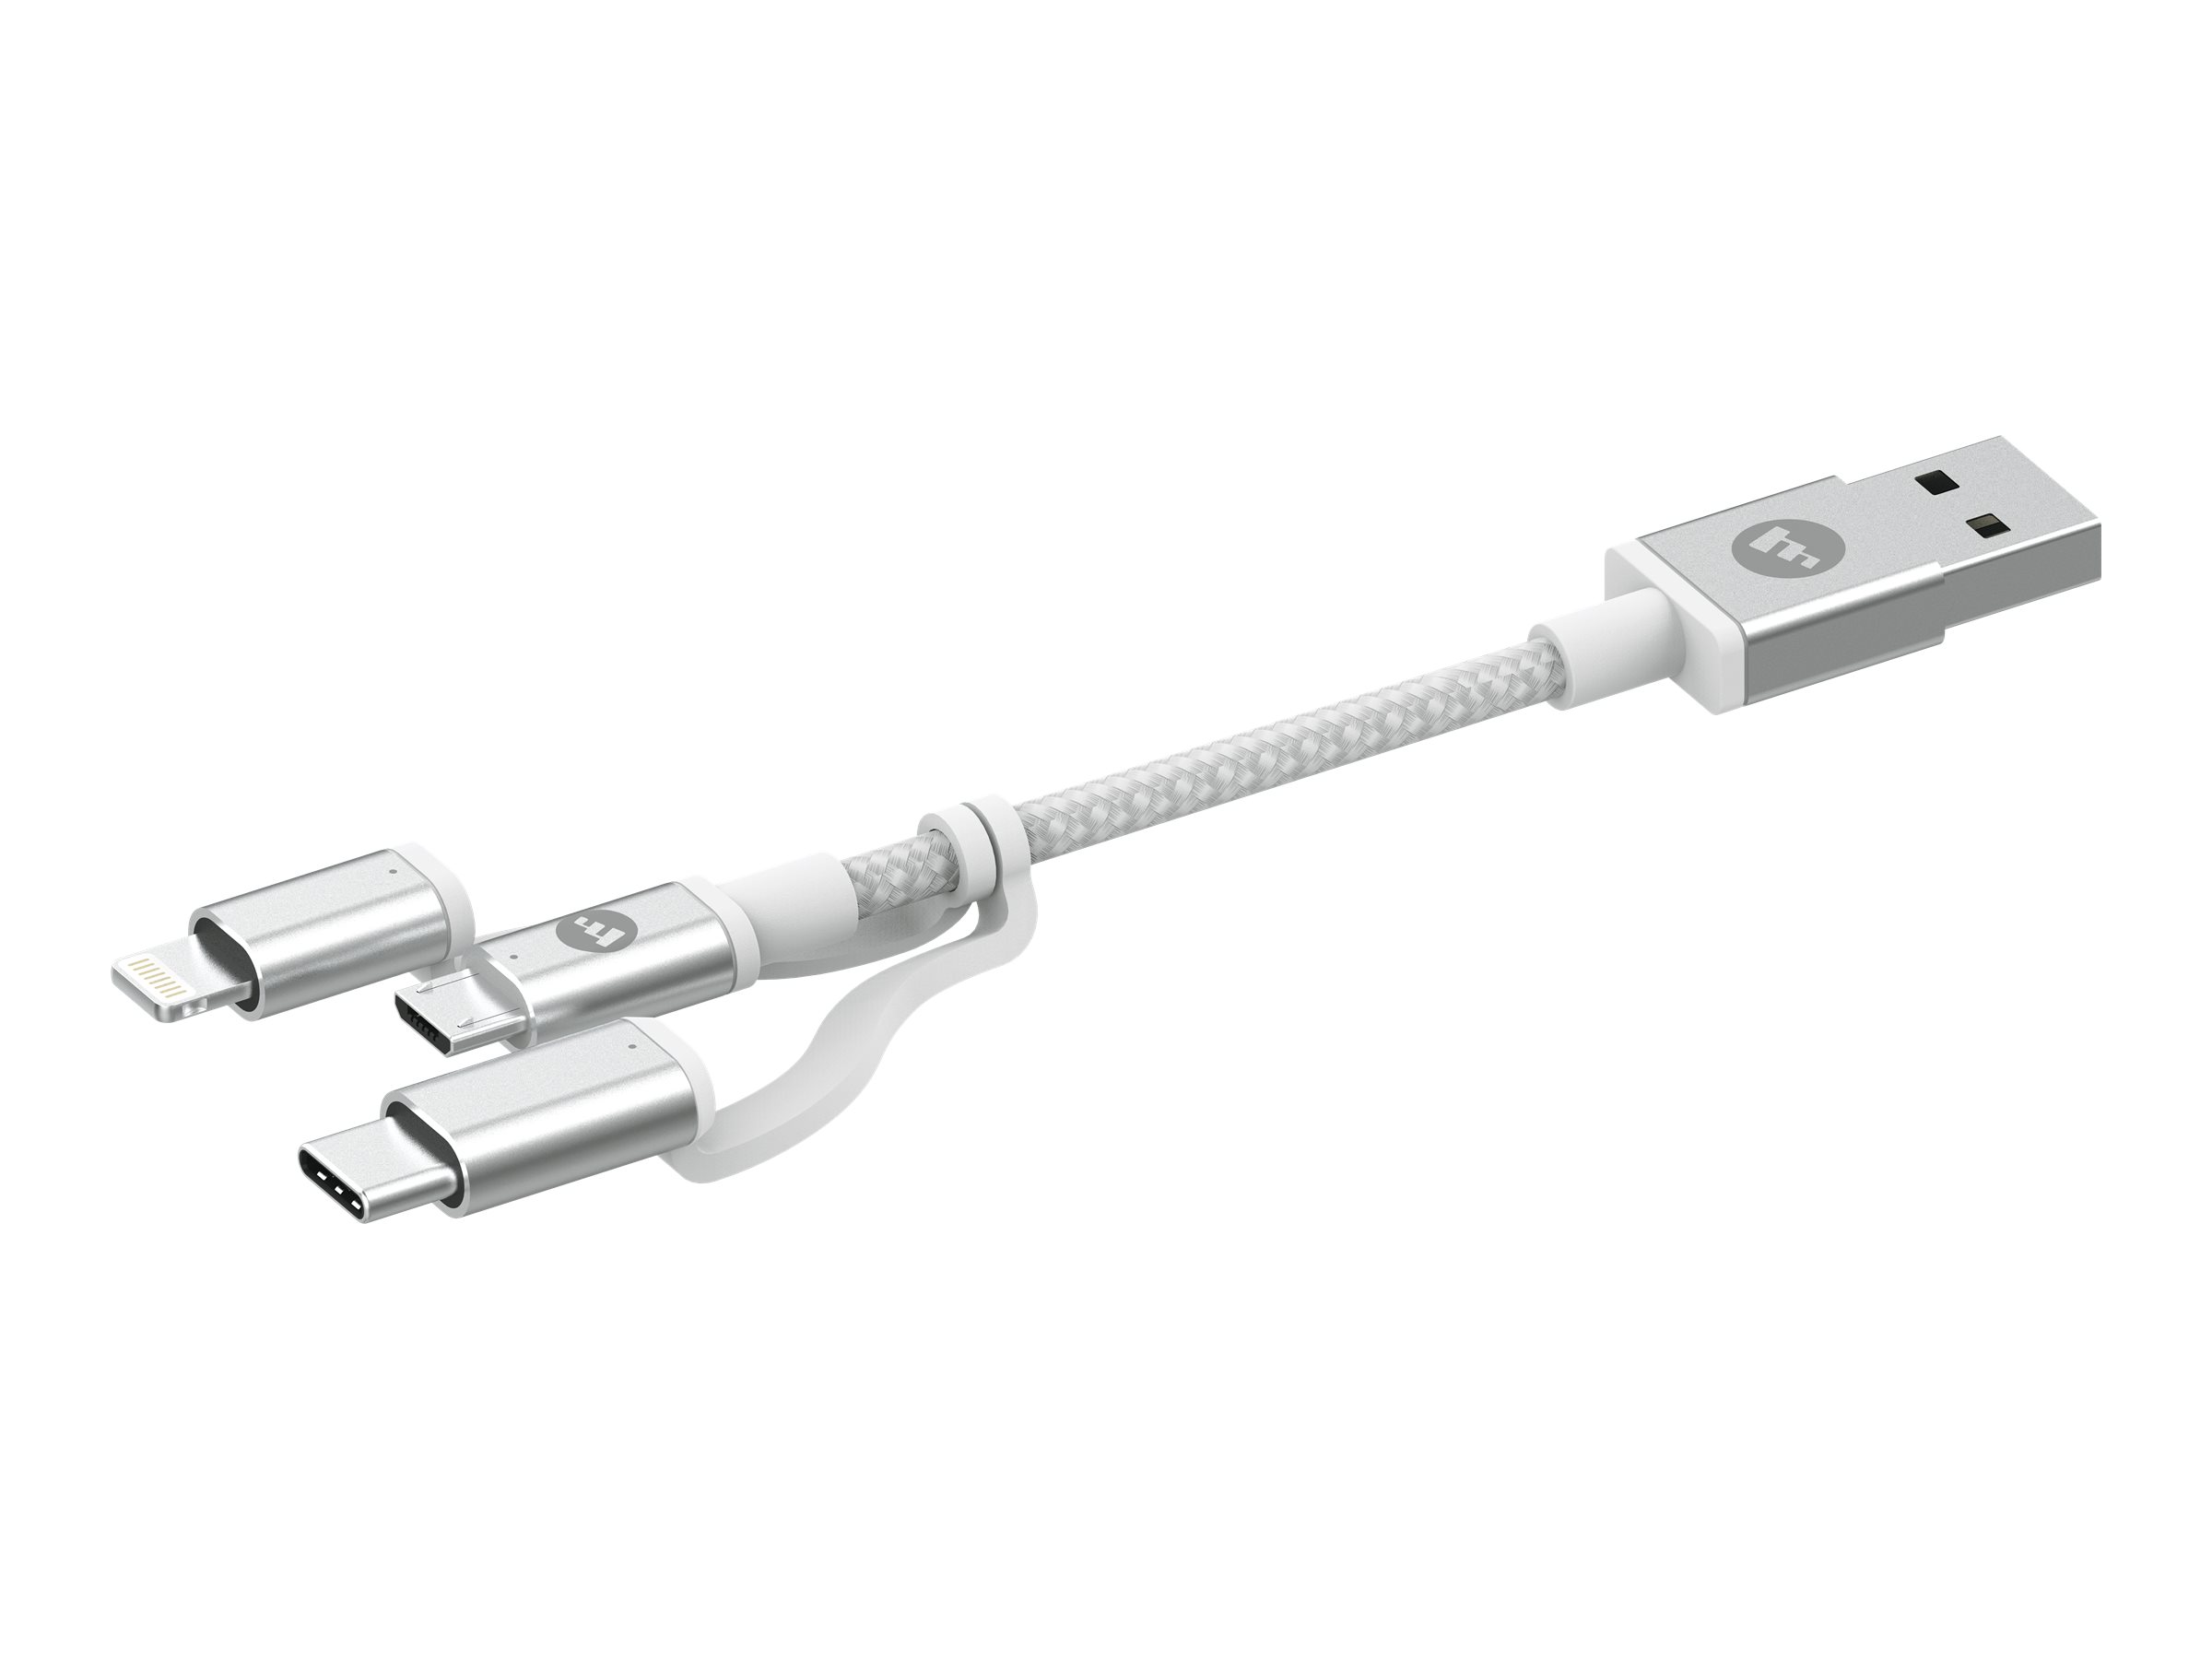 ZAGG Lade-/Datenkabel - USB männlich zu Micro-USB Typ B, Lightning, 24 pin USB-C männlich